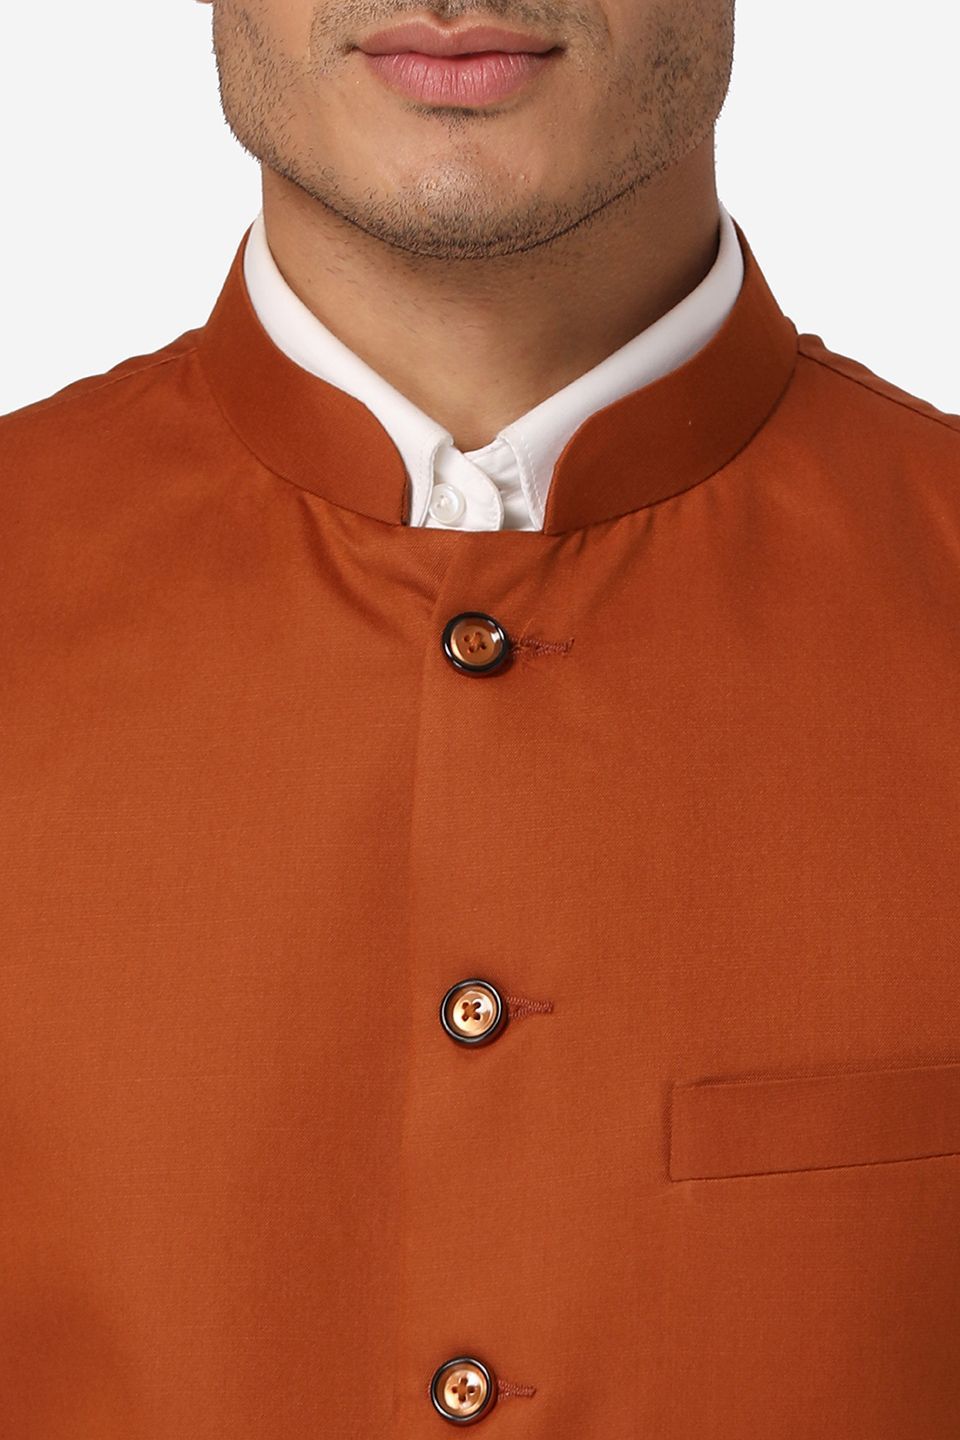 WINTAGE Men's Poly Cotton Festive and Casual Nehru Jacket Vest Waistcoat : Orange